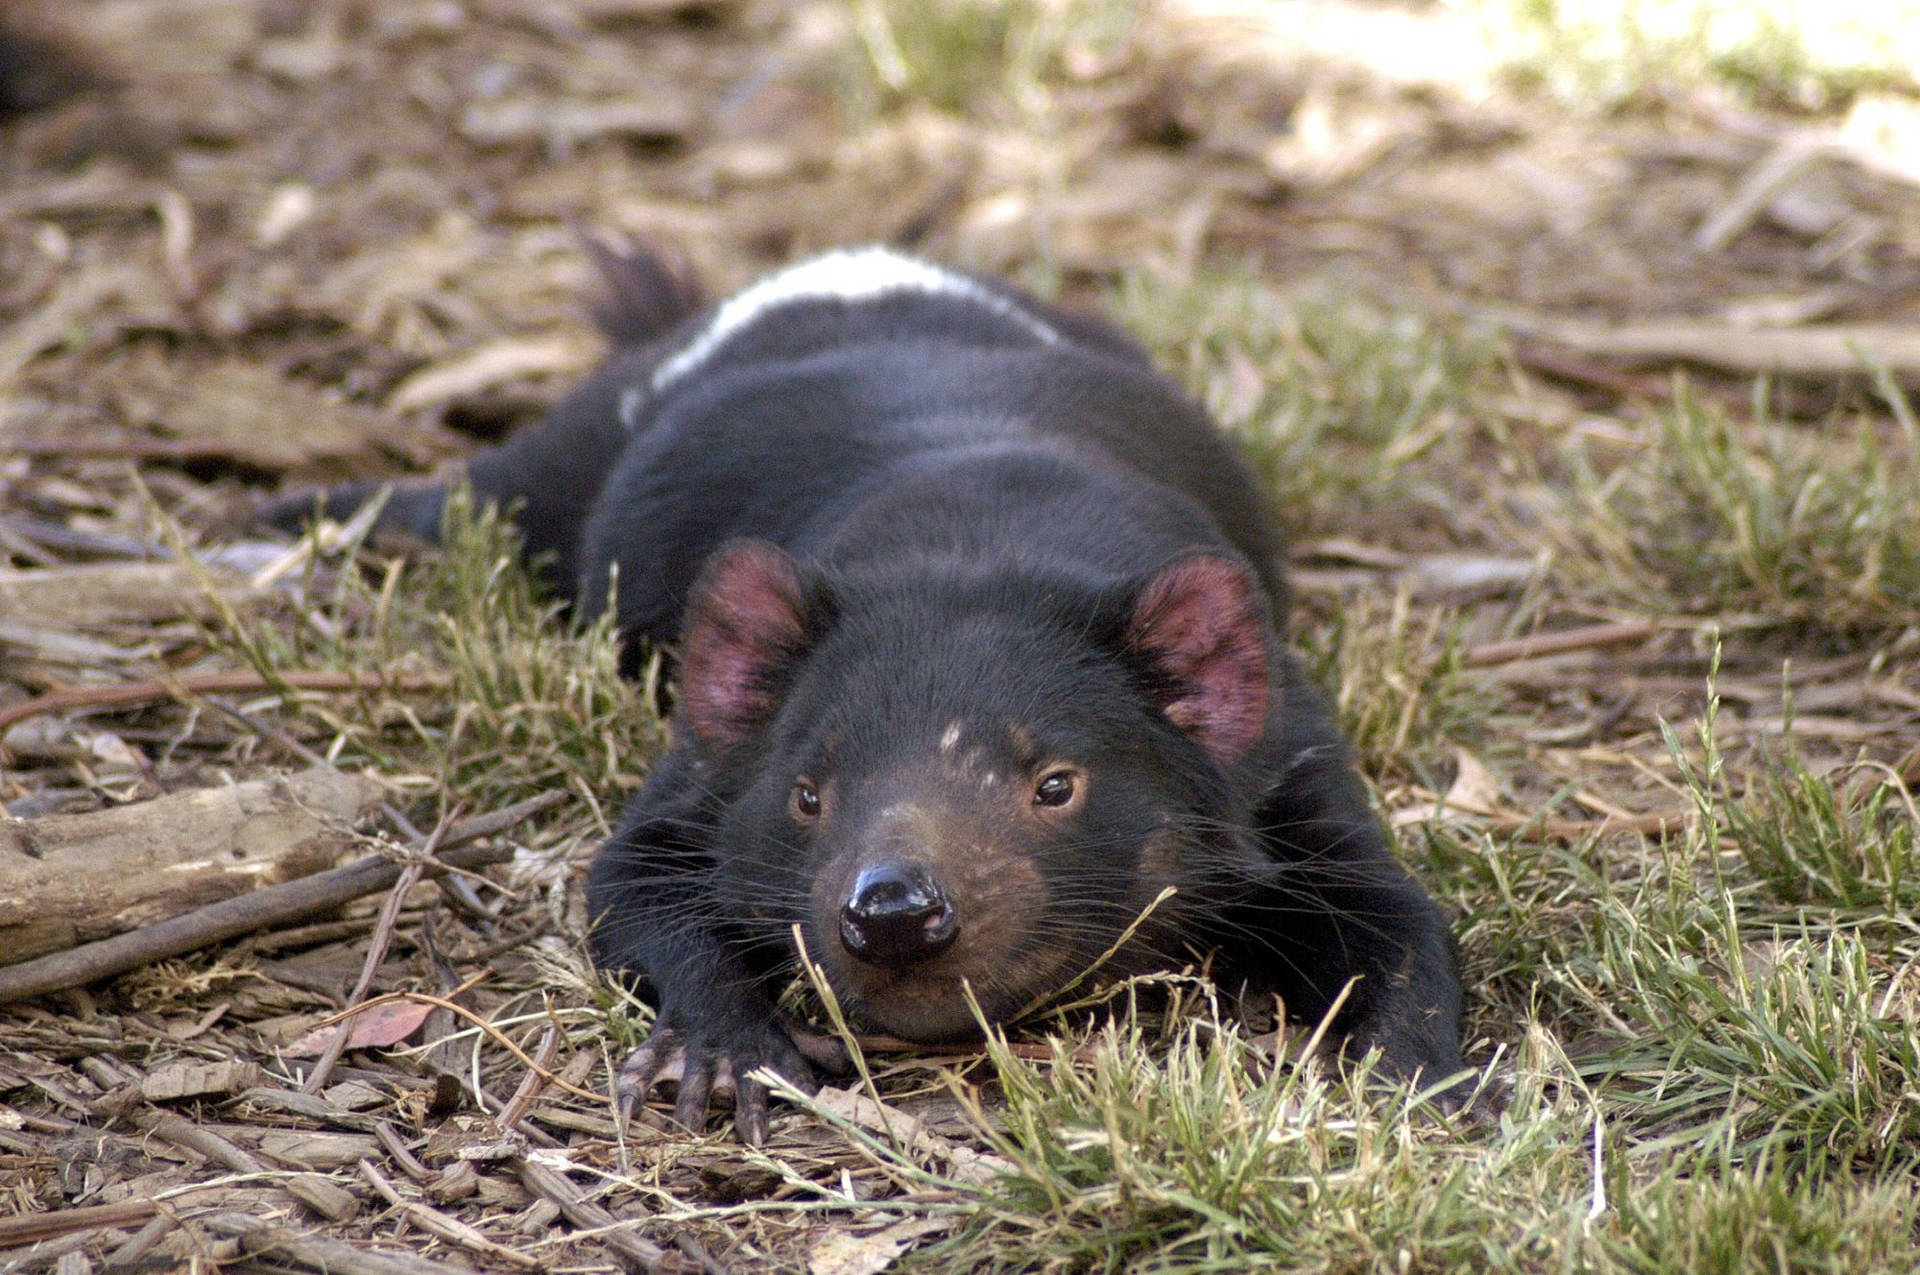 A peaceful Tasmanian devil resting in the grass. Wallpaper